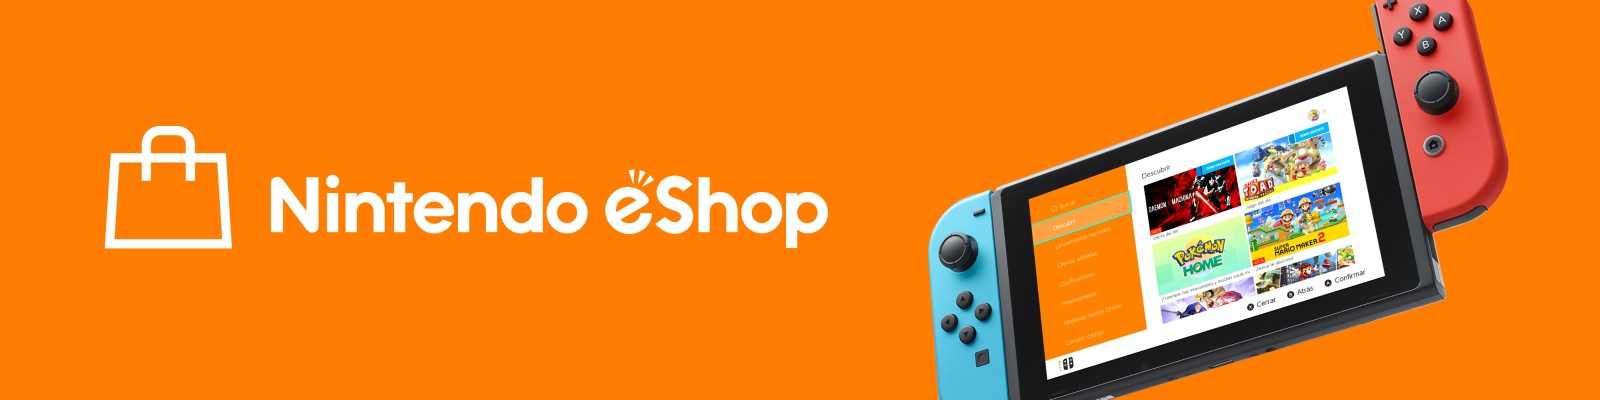 Cooperativa Experto comerciante Nintendo eShop | Nintendo